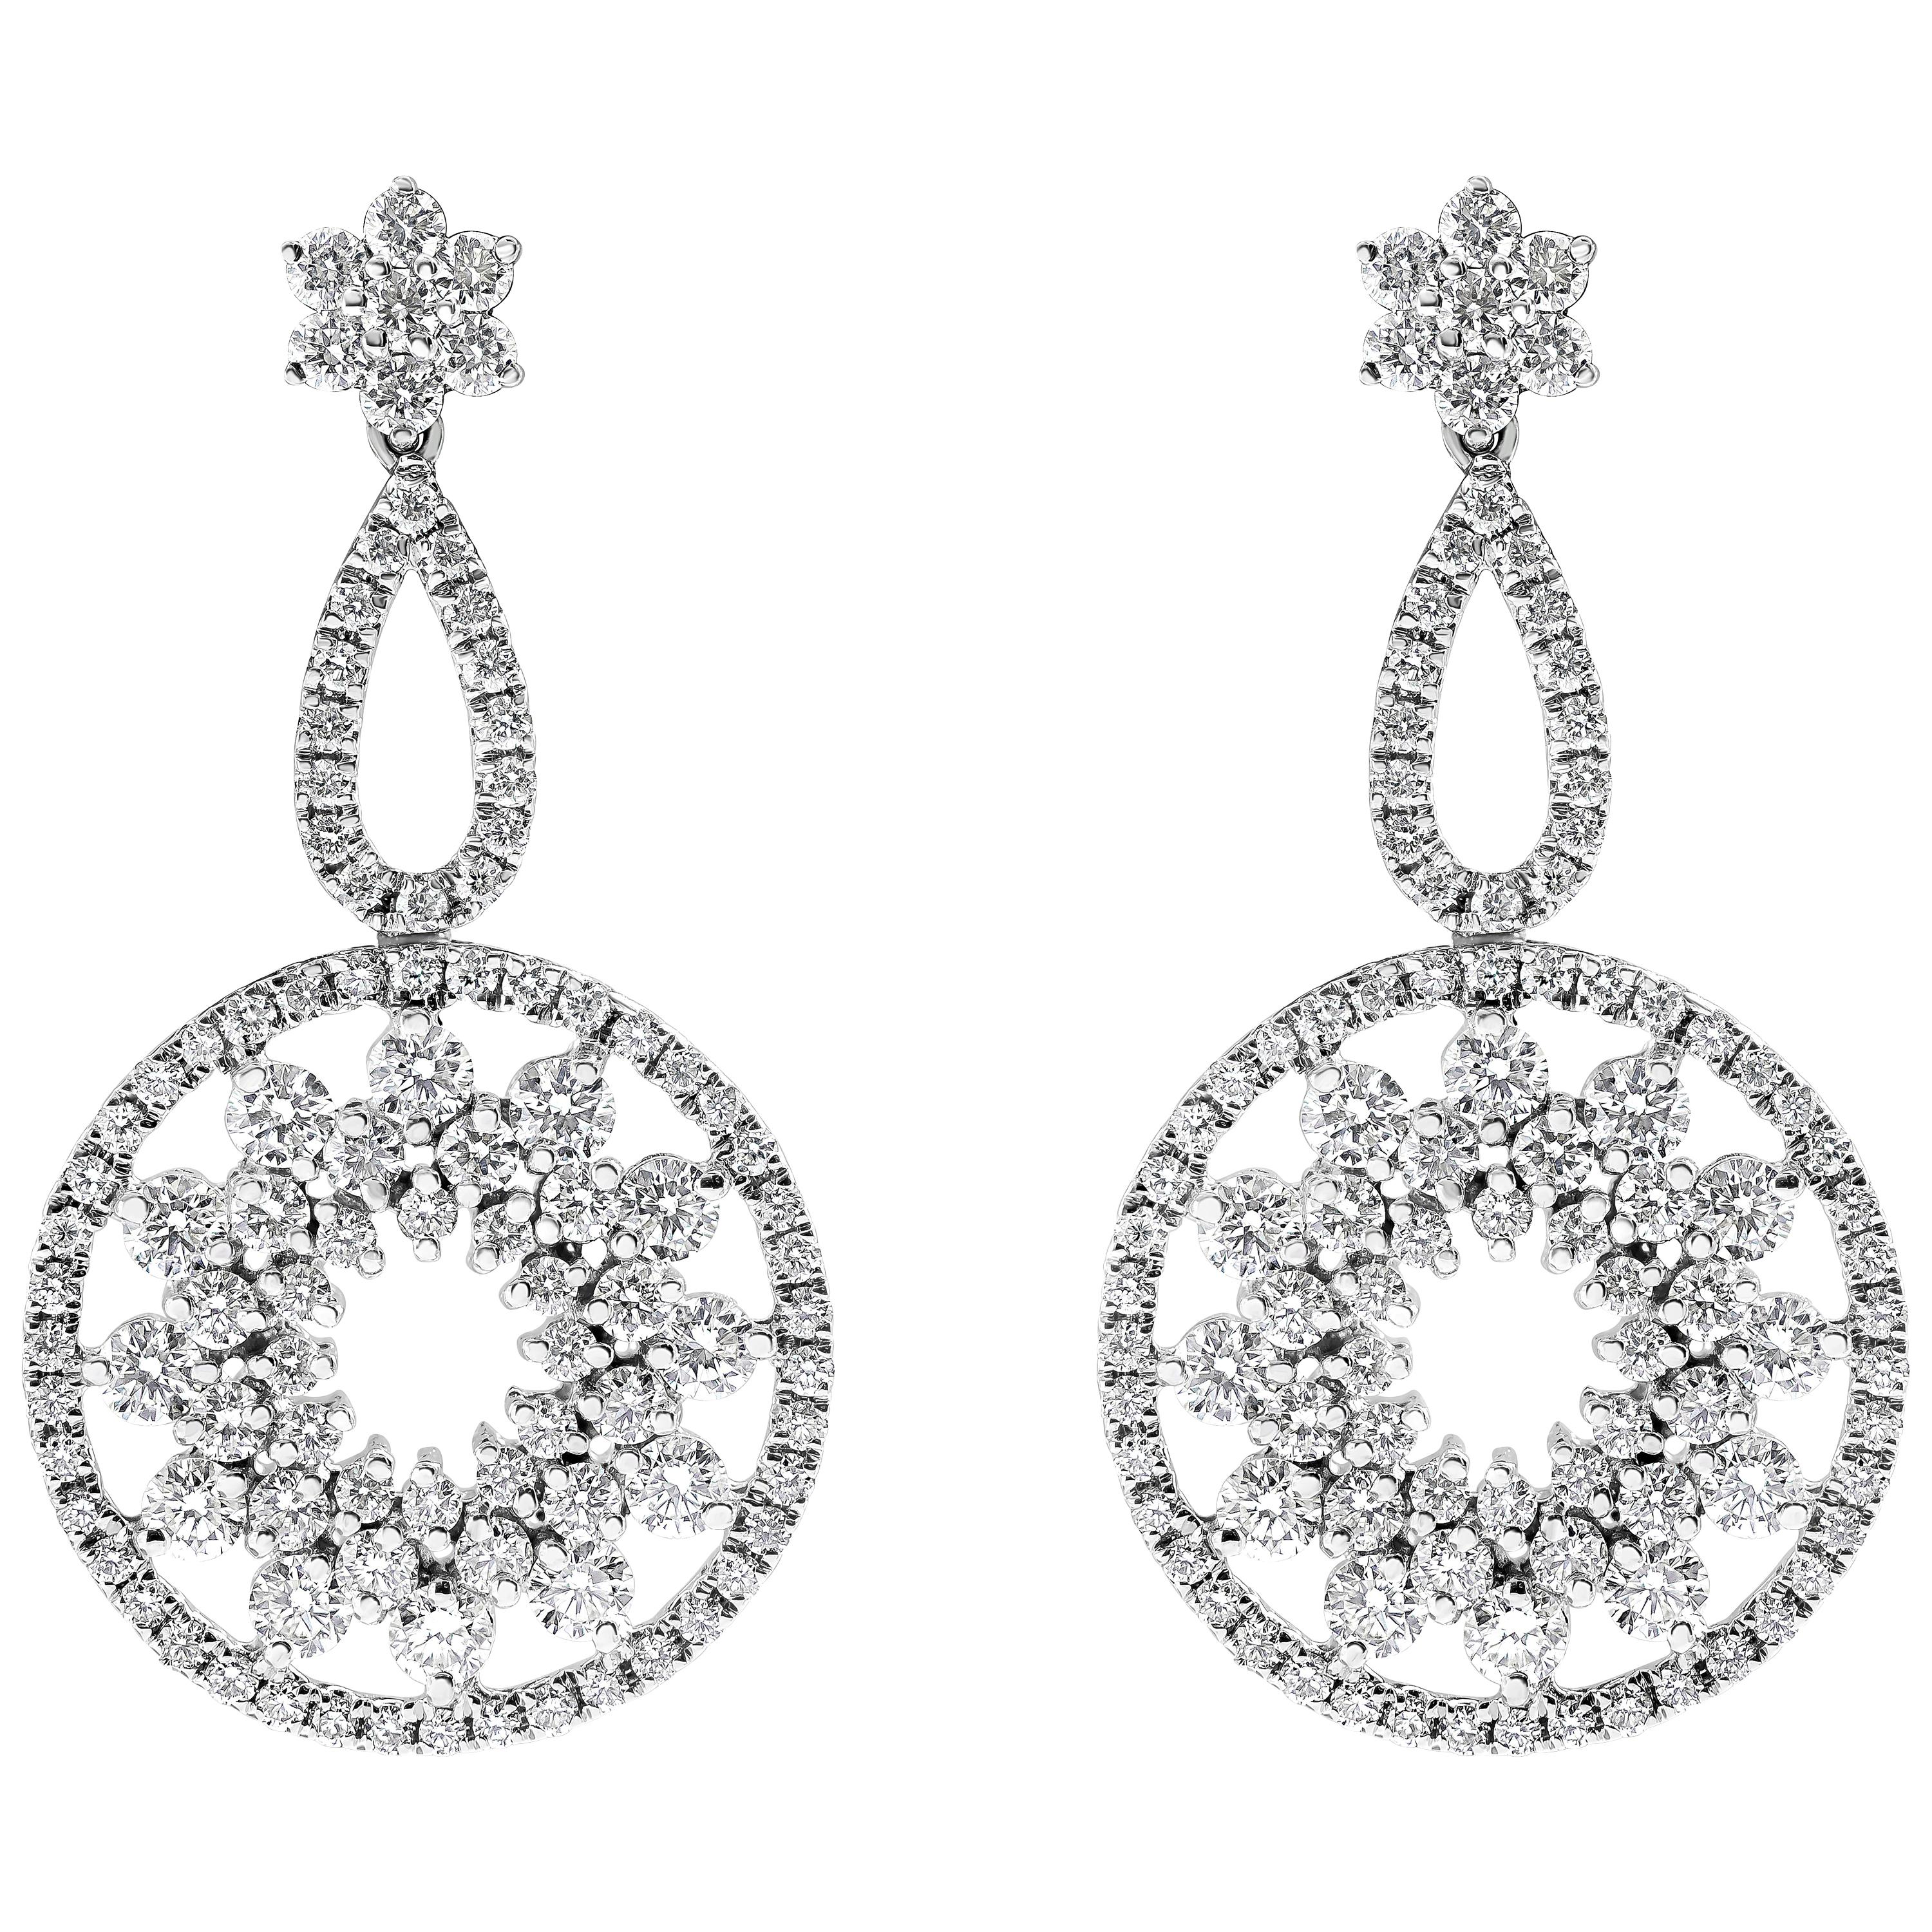 2.42 Carats Total Round Diamond Arabesque Art Design Dangle Earrings